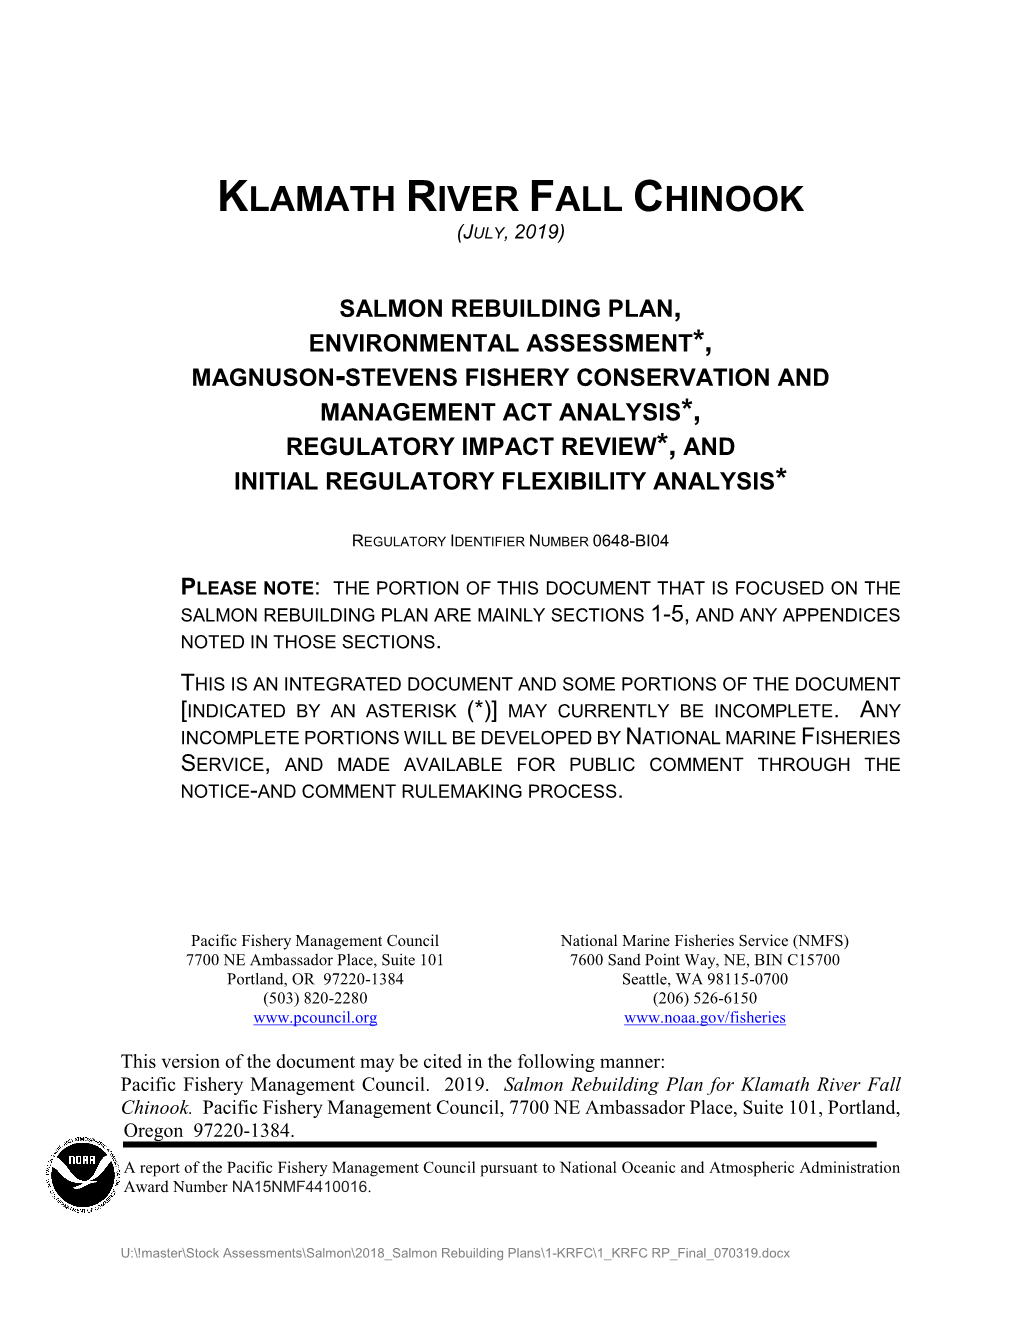 Klamath River Fall Chinook Salmon Rebuilding Plan